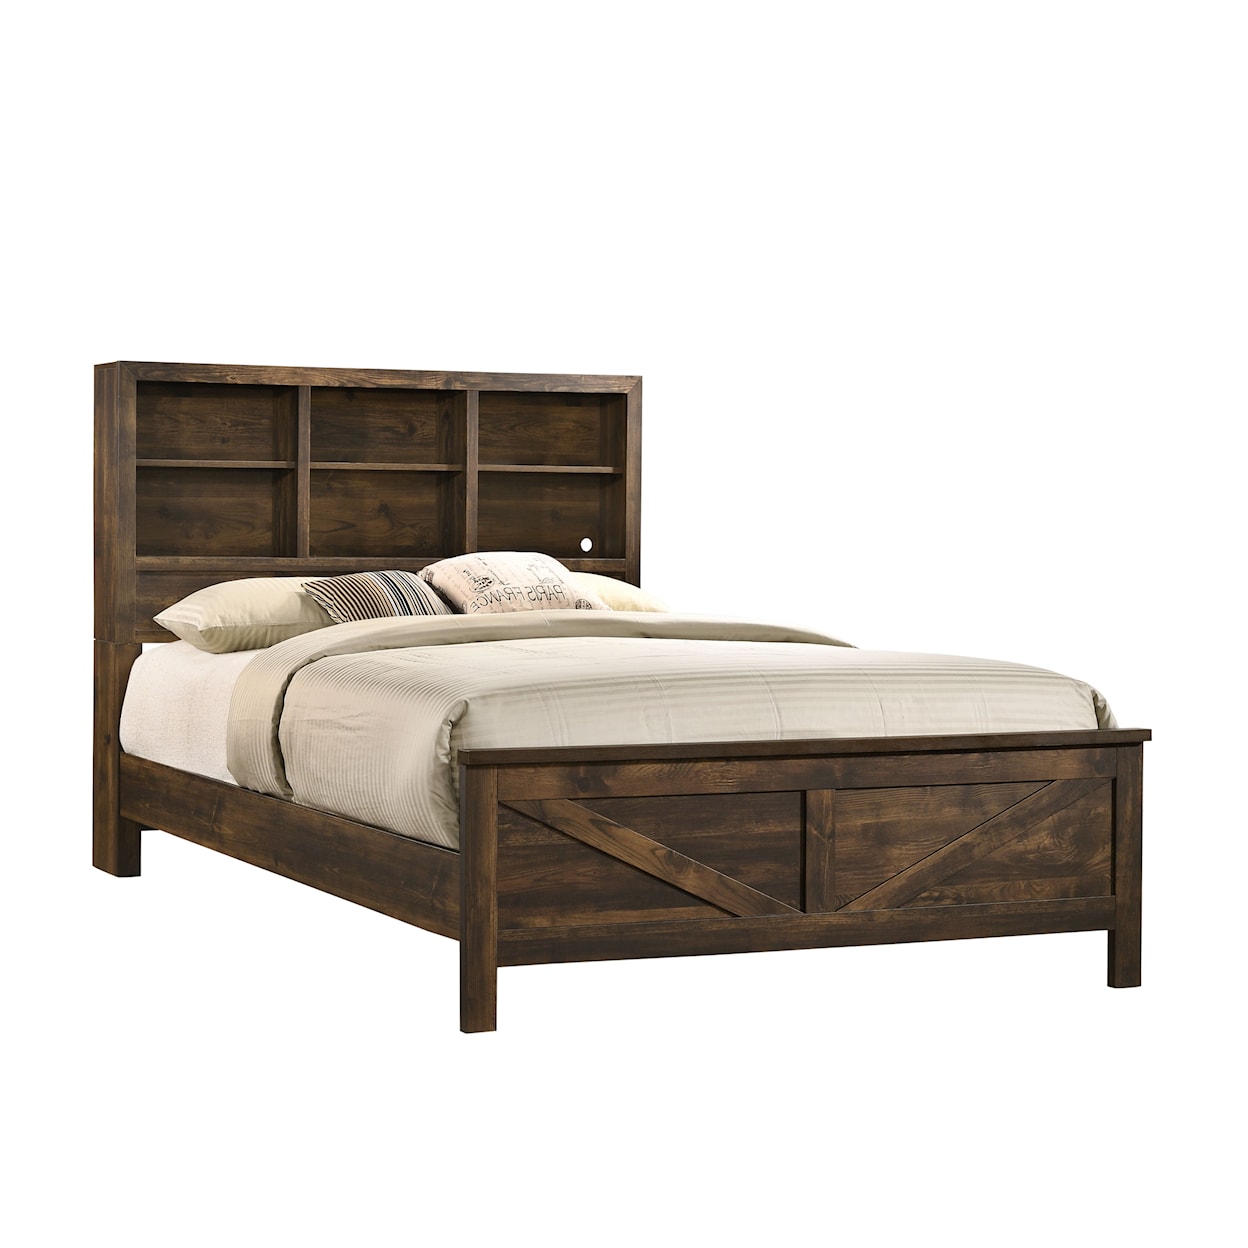 Lifestyle Rustic Oak RUSTIC OAK FULL BED |